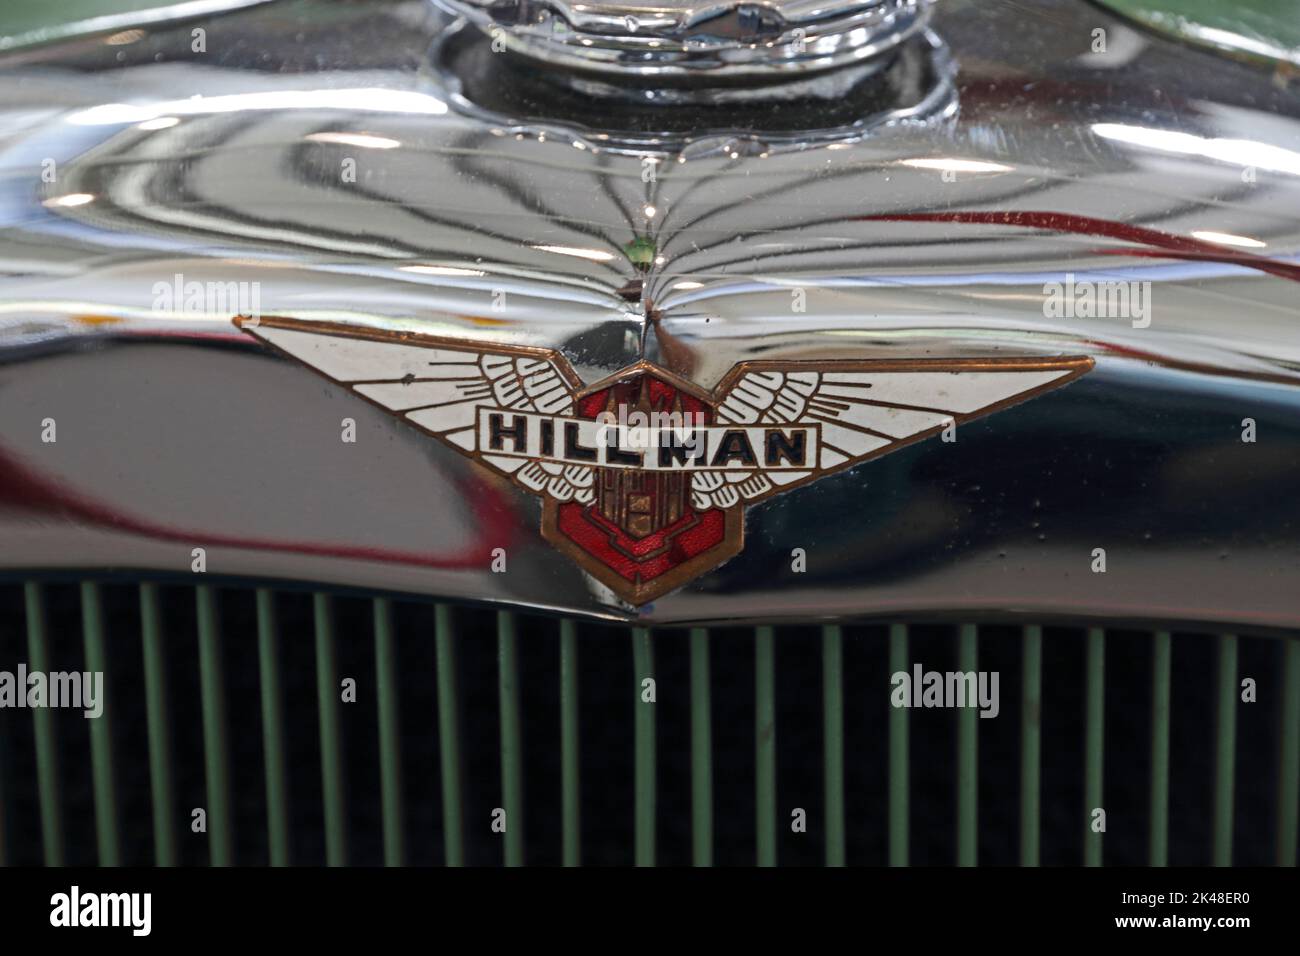 Hillman car badge on top of radiator Stock Photo